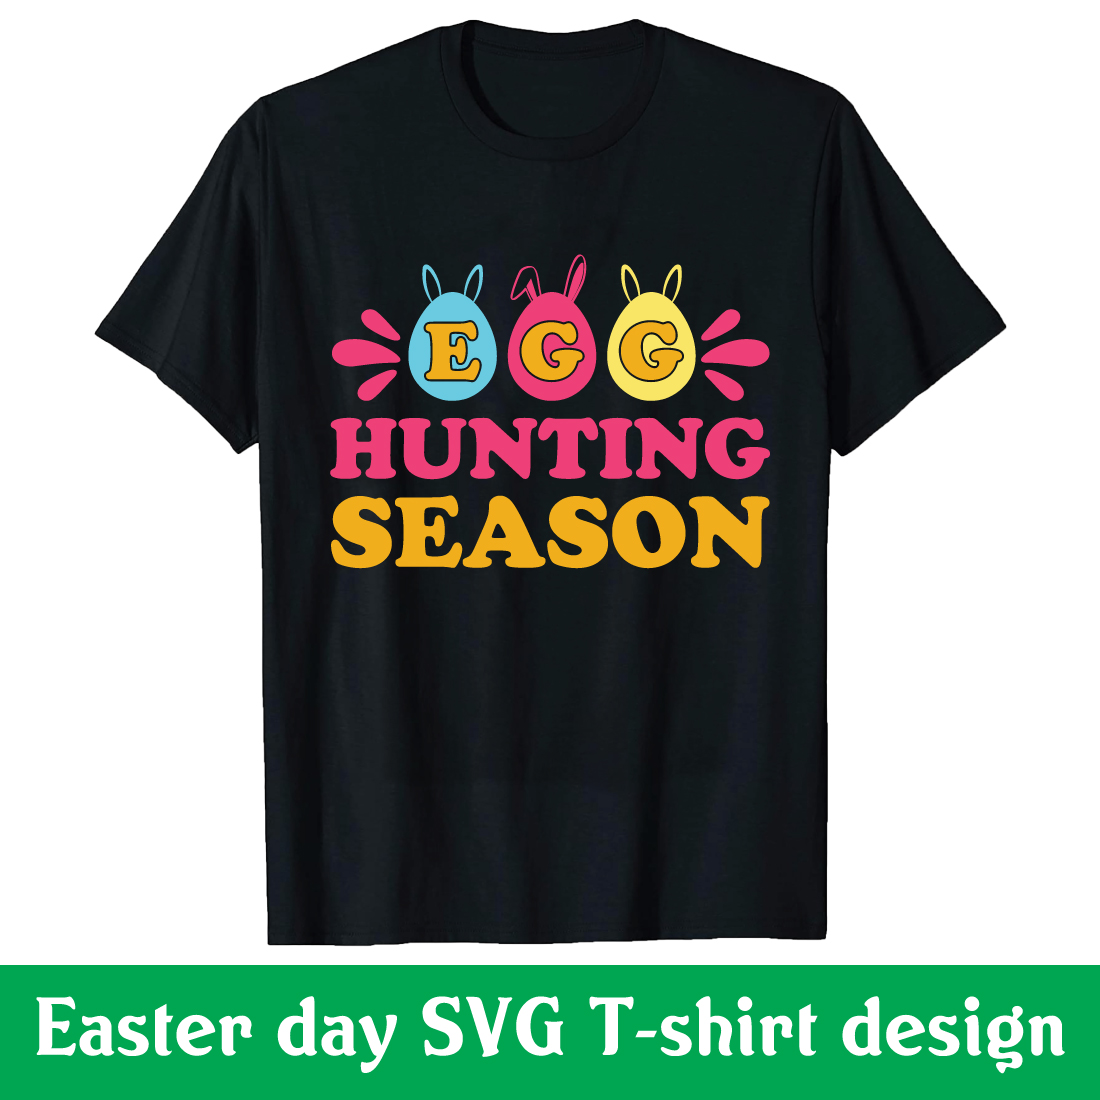 EGG hunting season T-shirt design cover image.